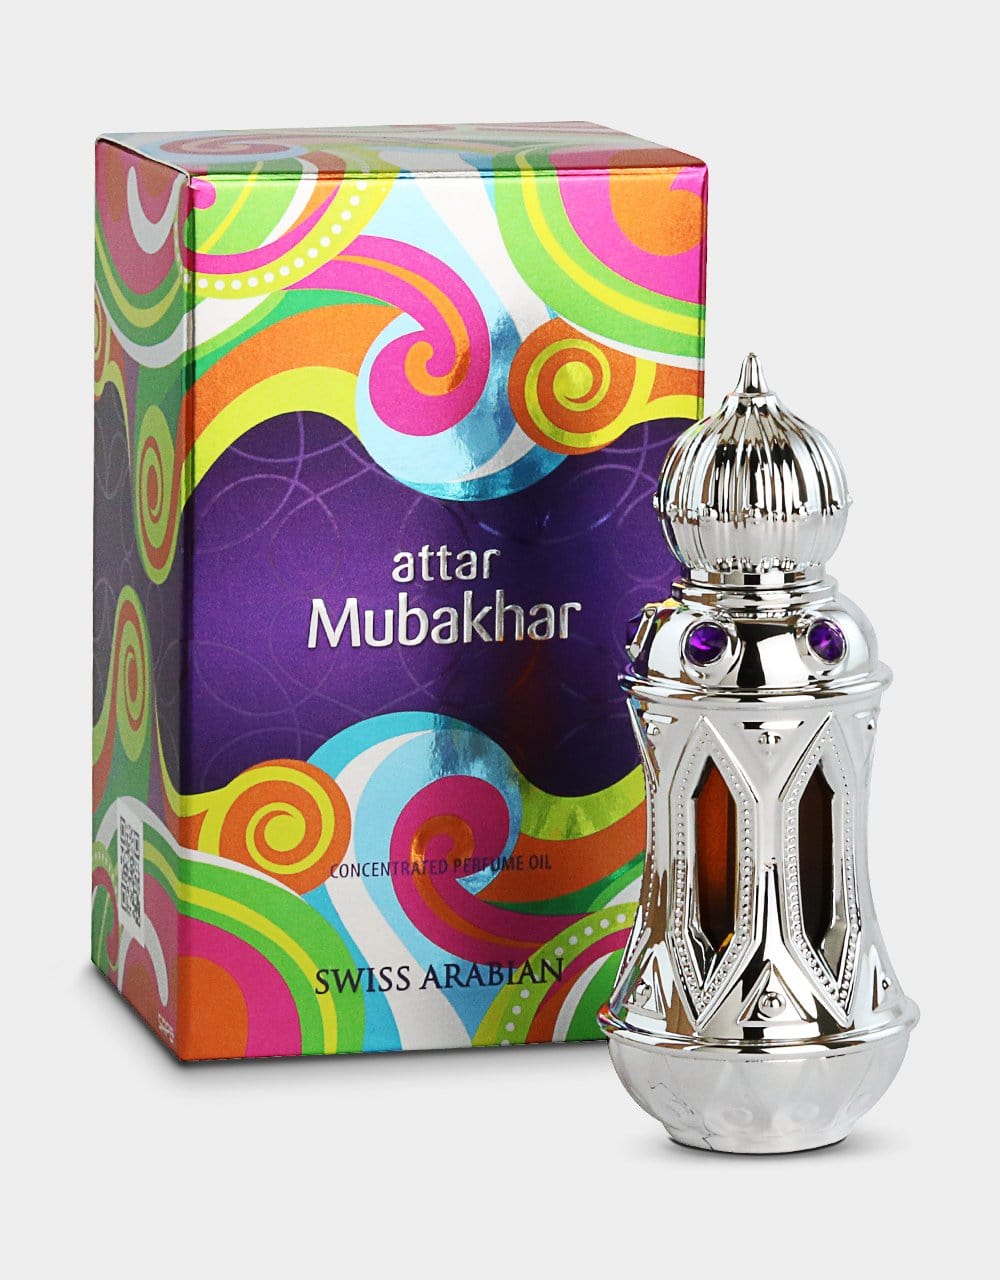 Swiss Arabian Attar Mubakhar Concentrated Perfume Oil 20ml